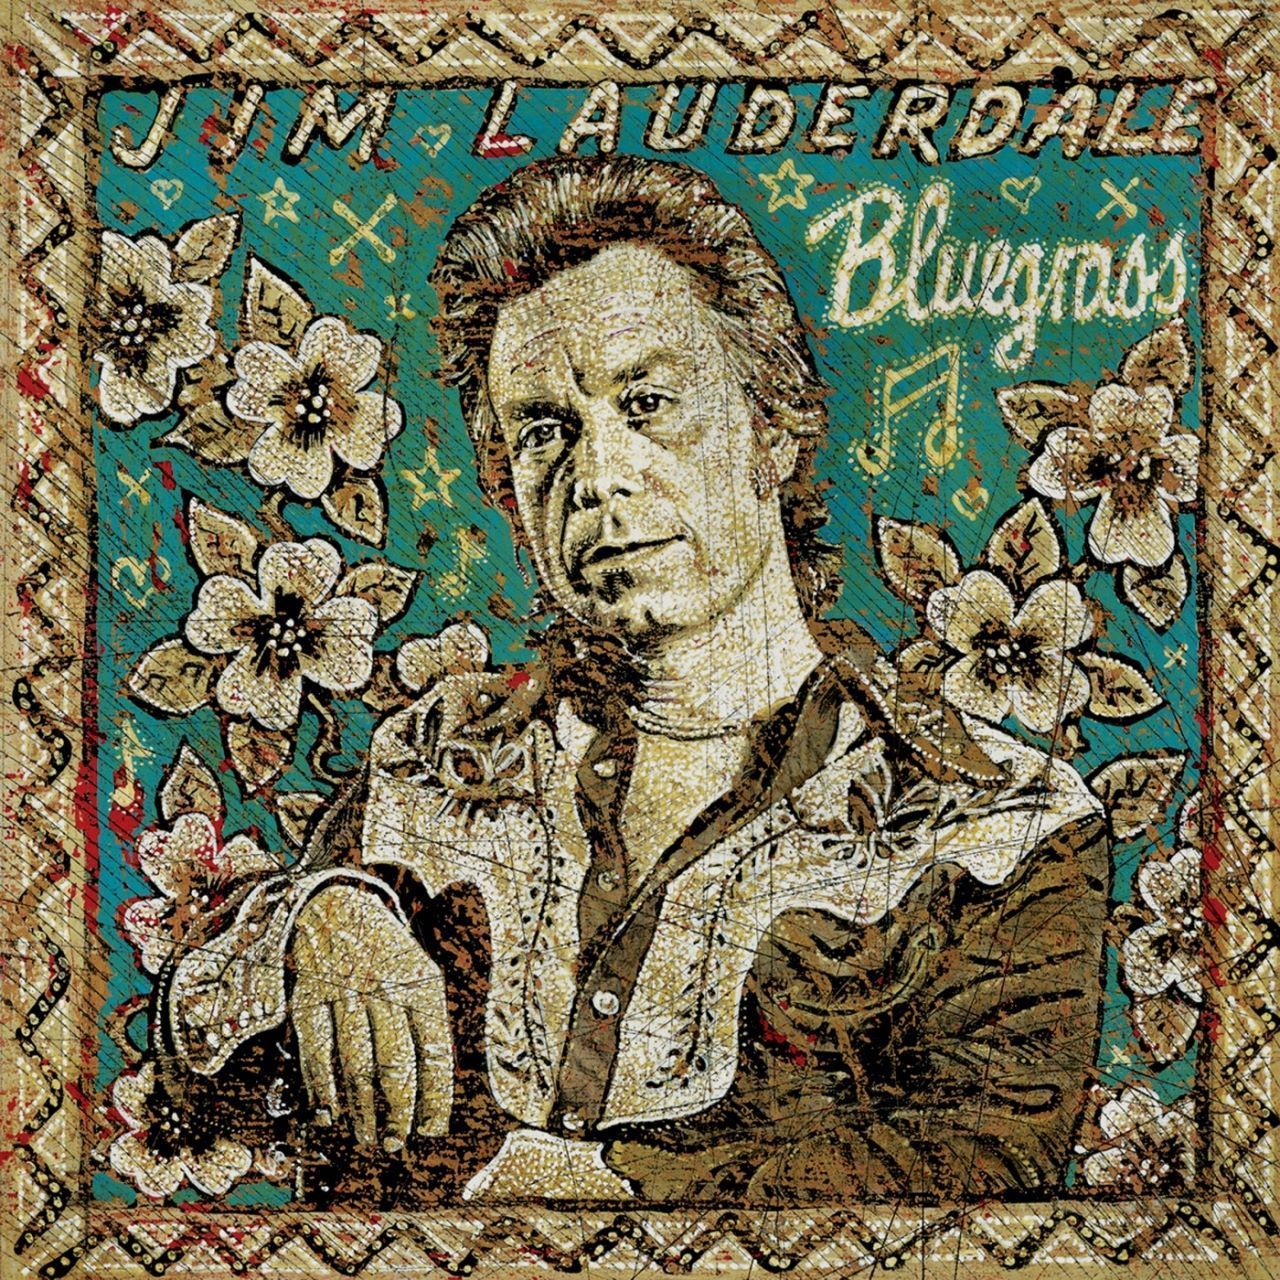 Jim Lauderdale - Bluegrass cover album